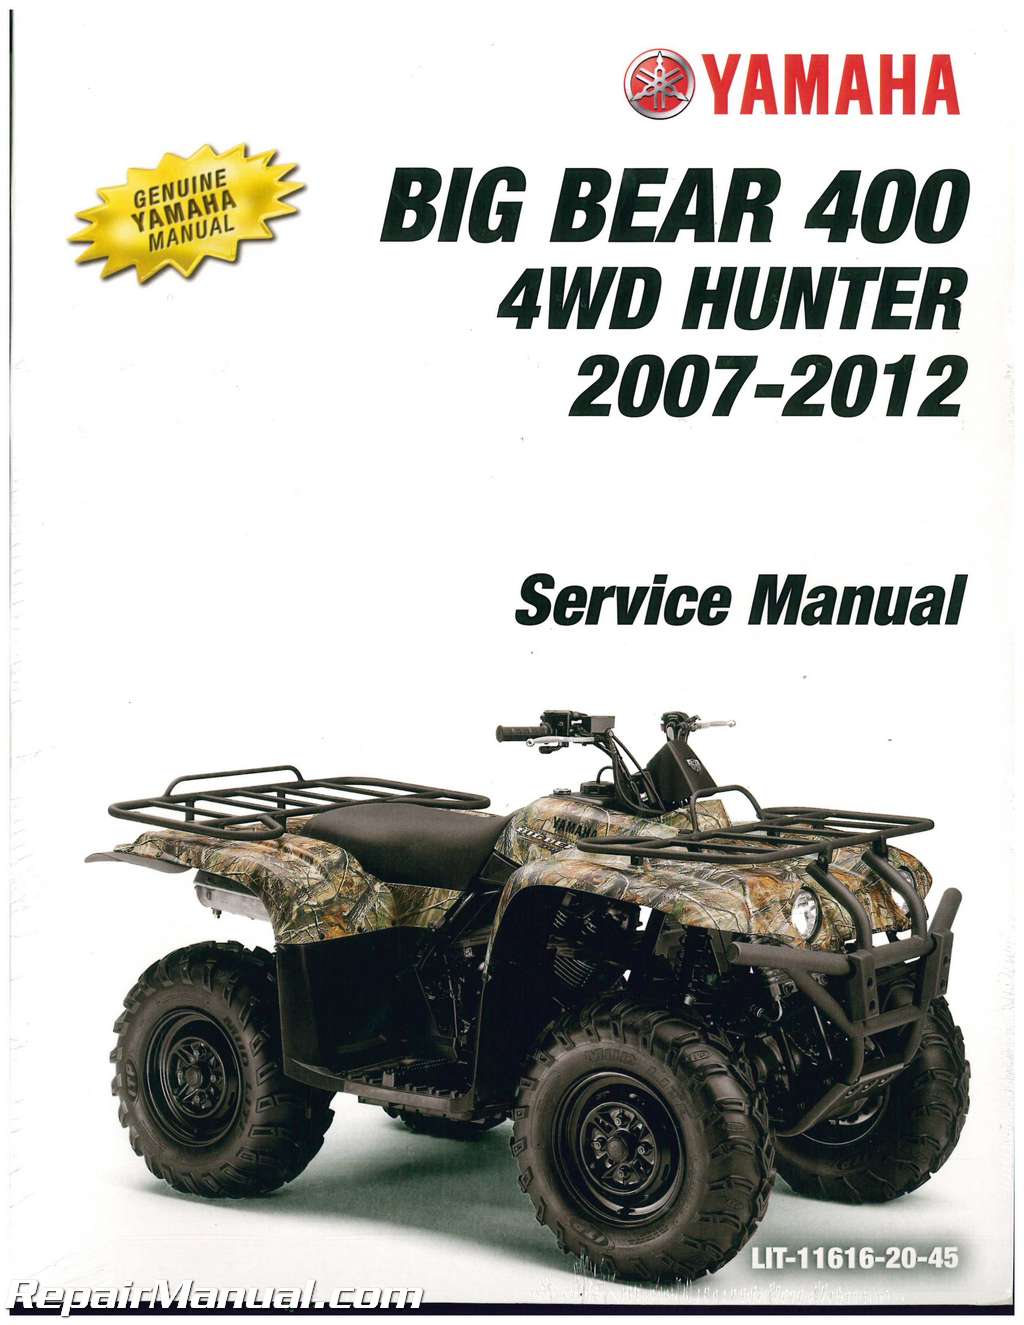 Big bear 400 service manual